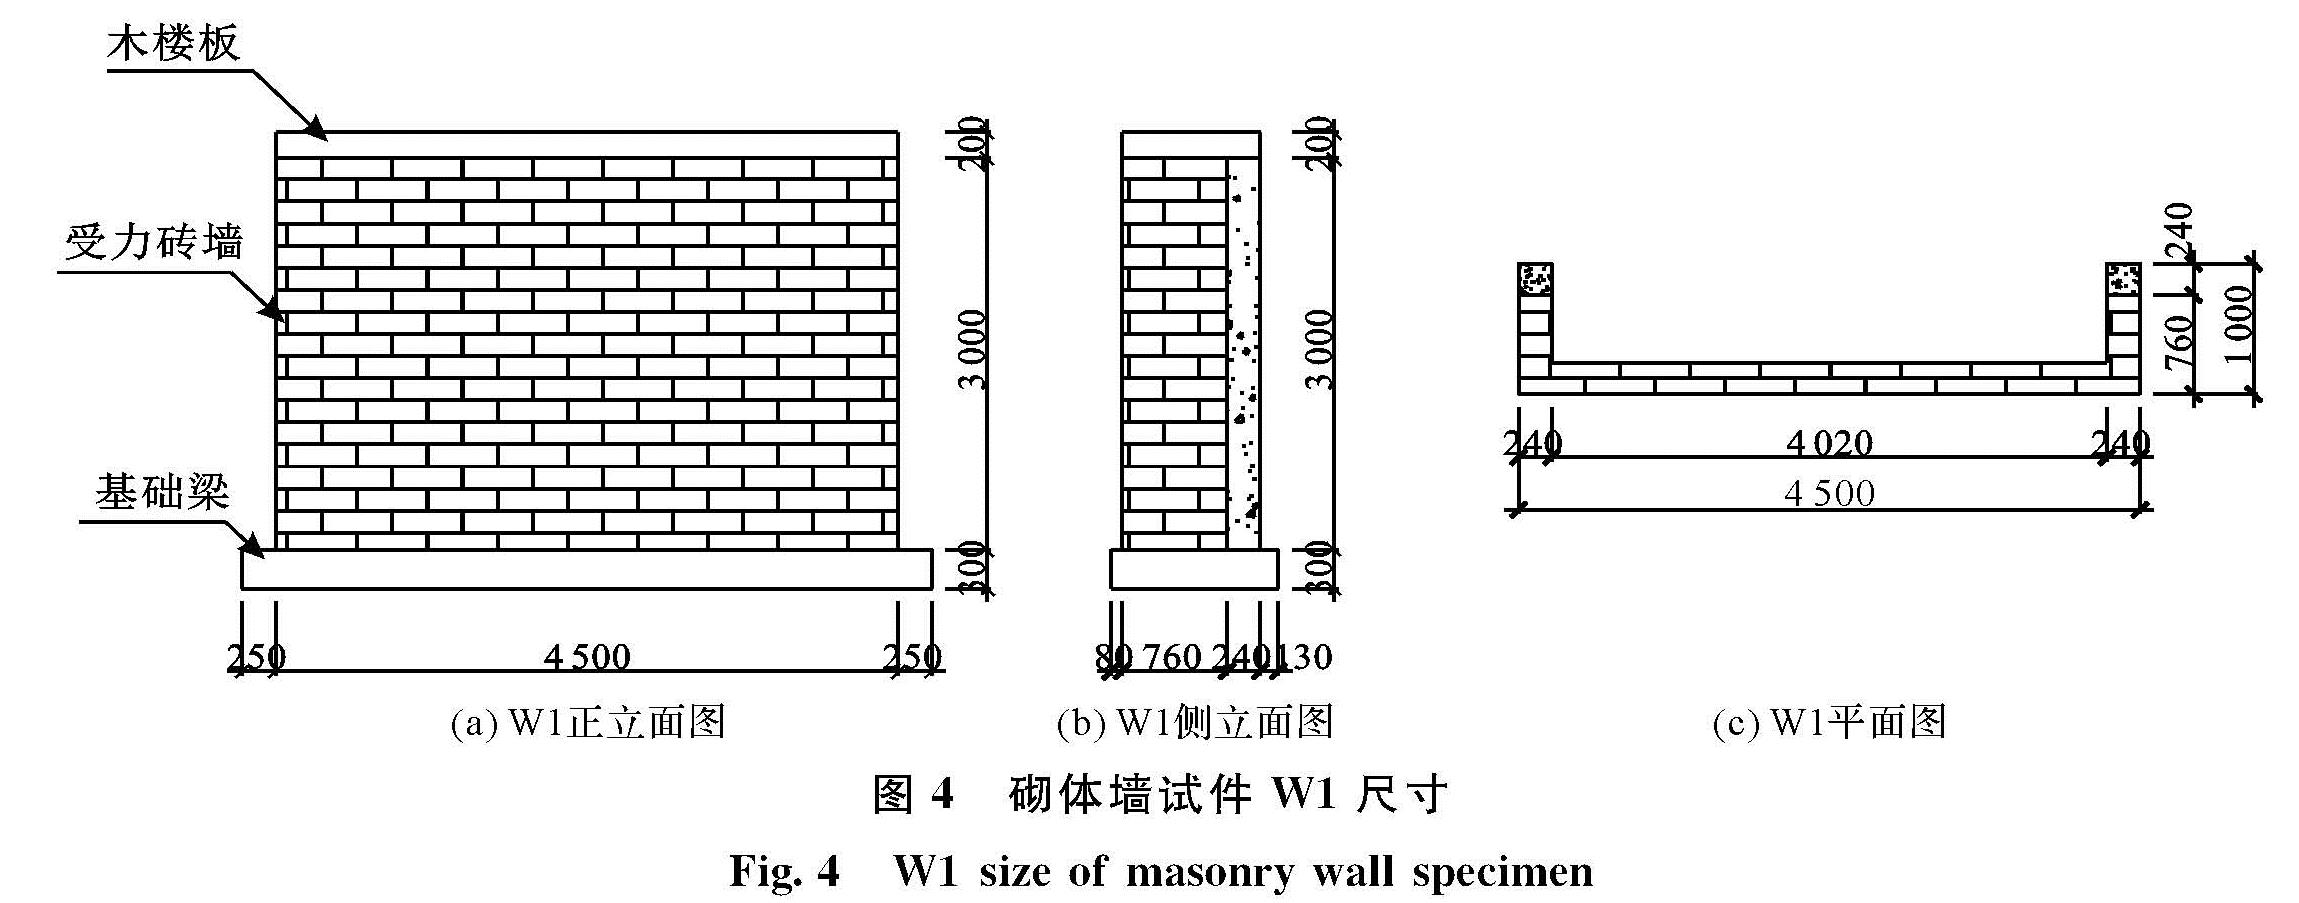 图4 砌体墙试件W1尺寸<br/>Fig.4 W1 size of masonry wall specimen